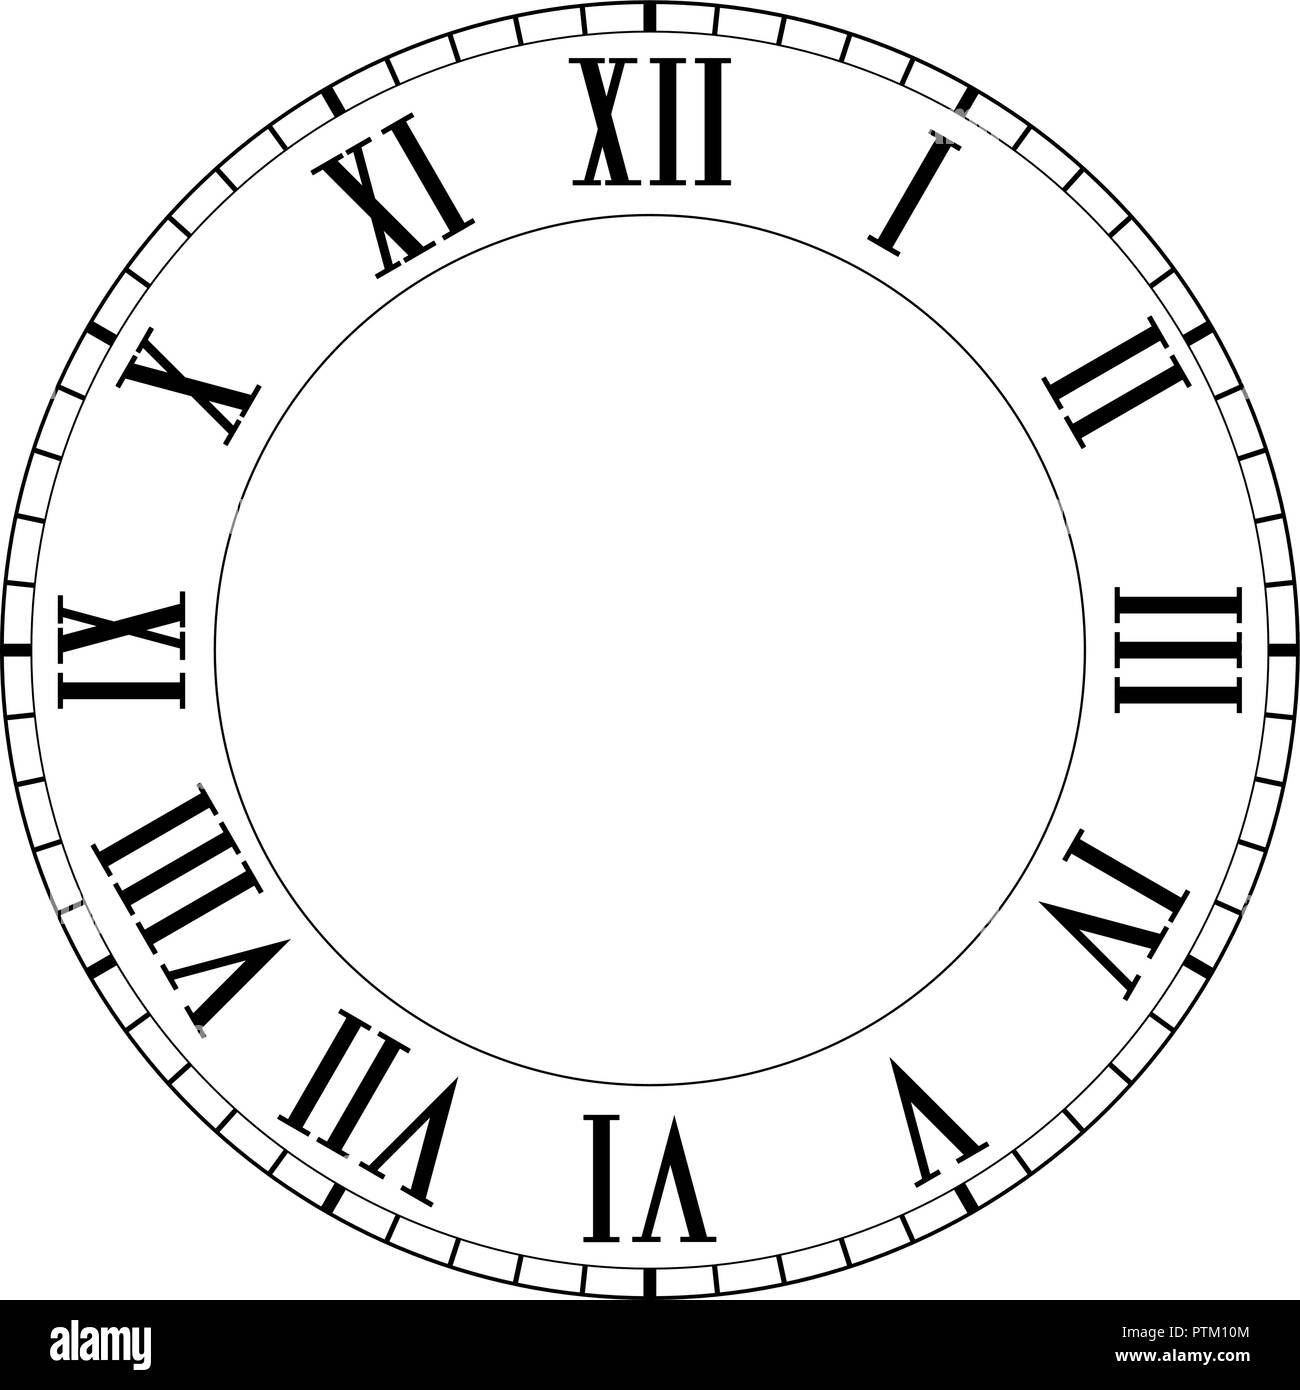 3237 - Roman Numeral Clock Face